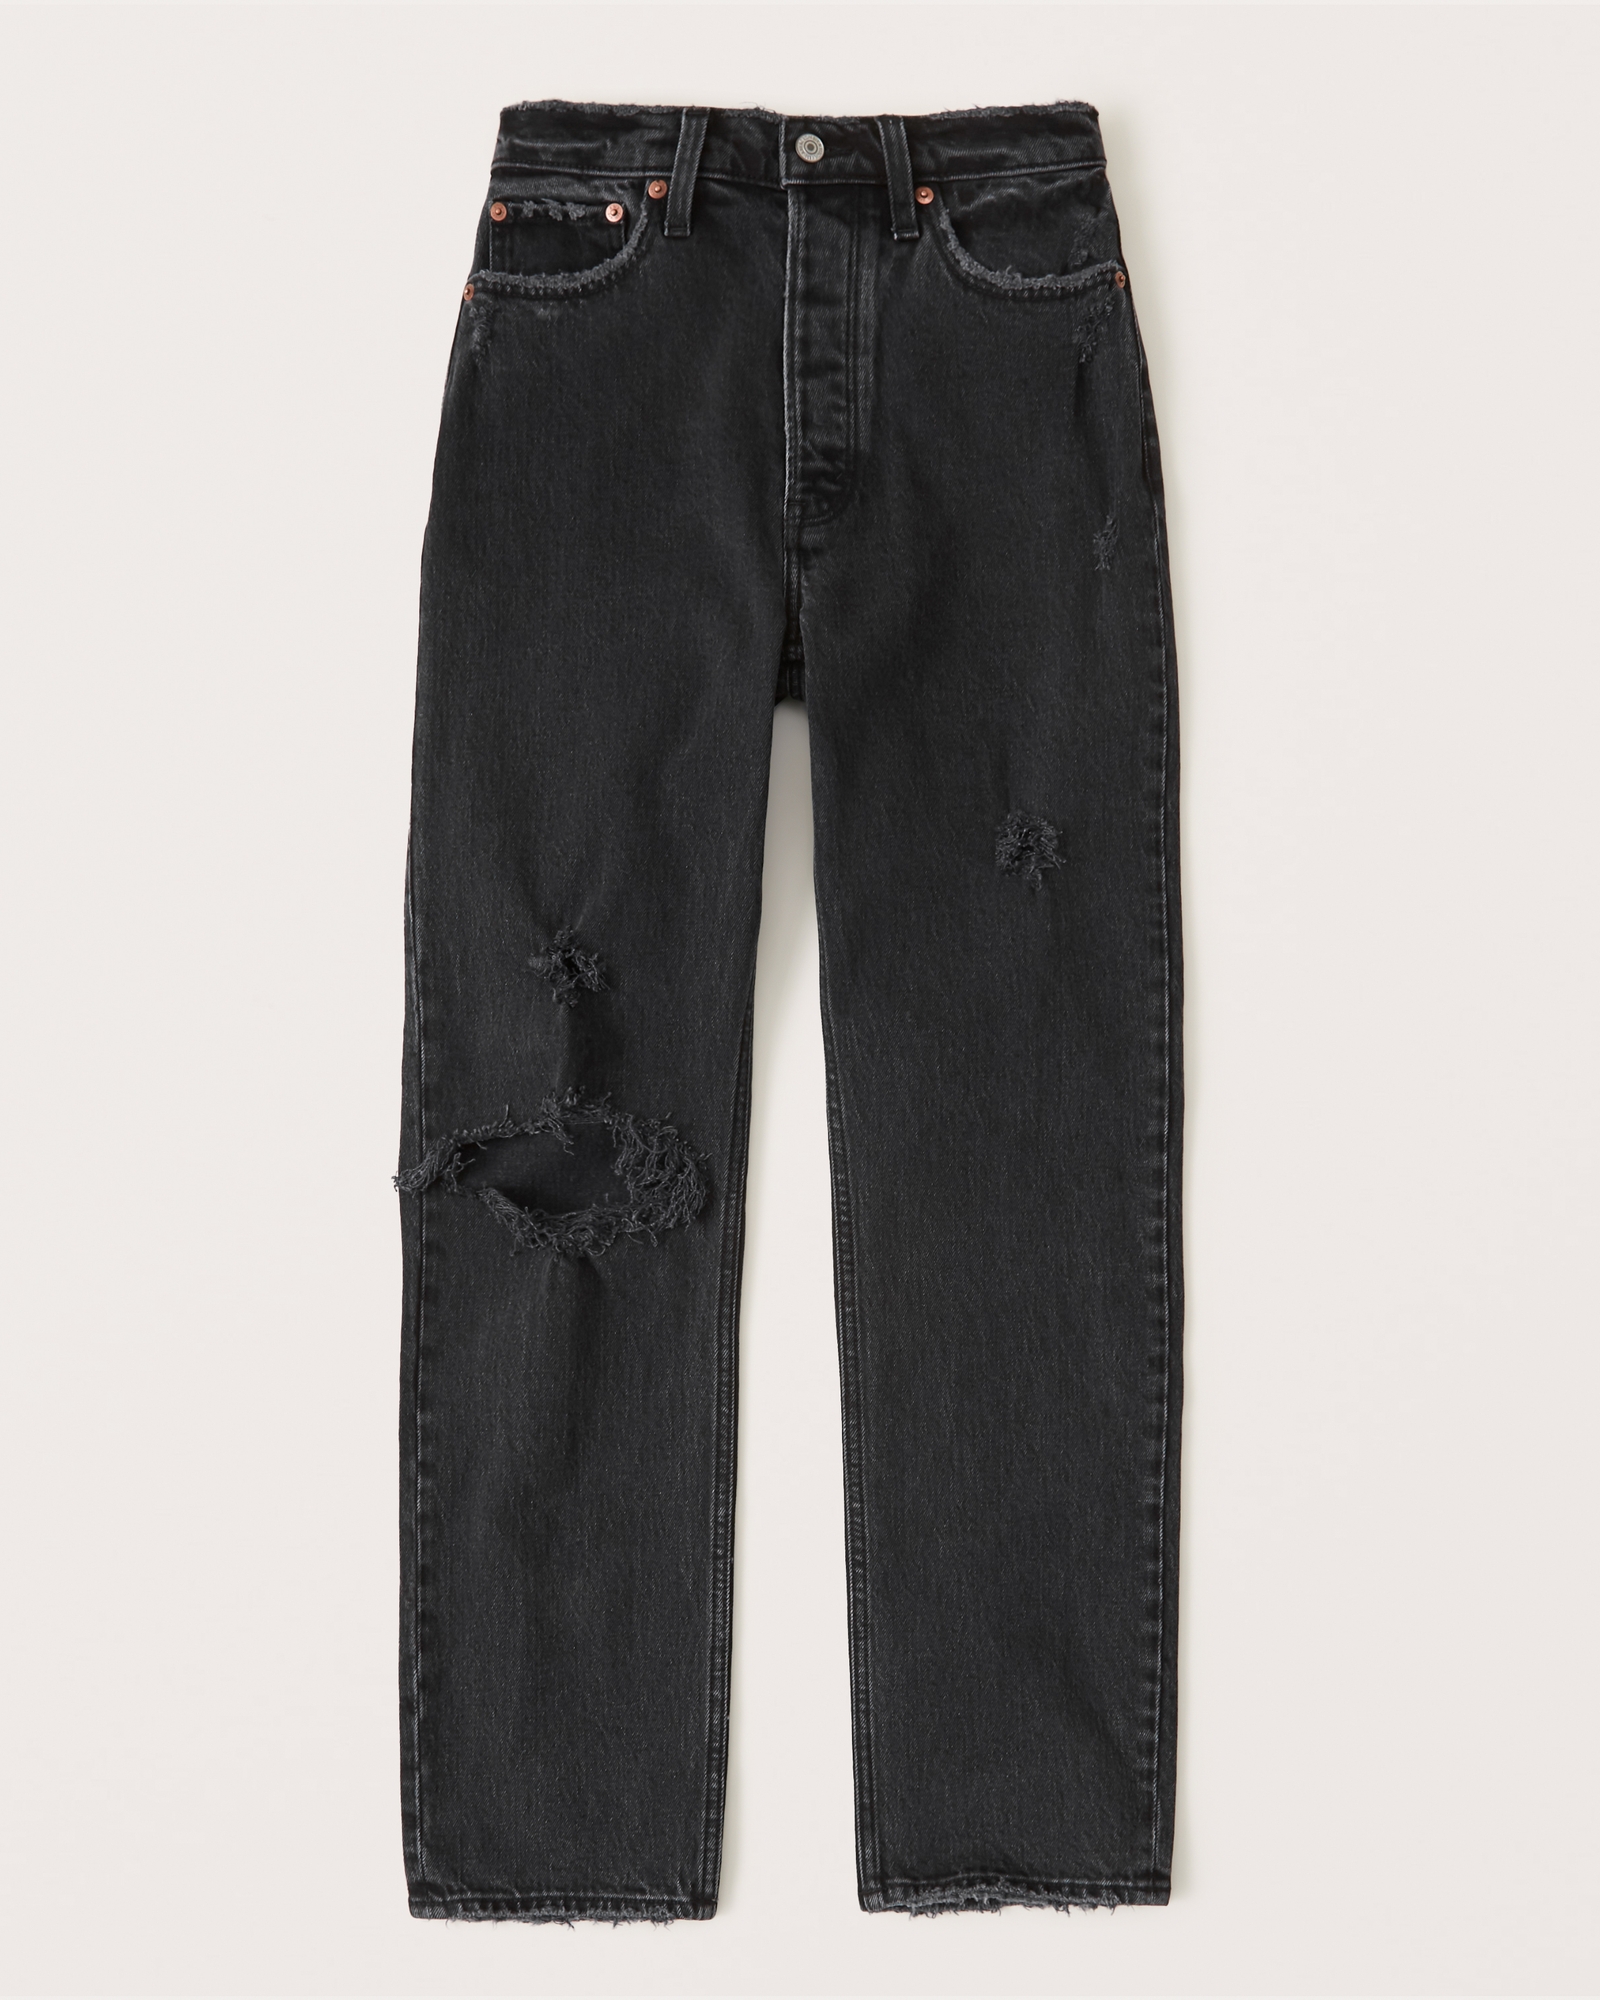 Jeans De Mujer Jean Hole Vintage Streetwear Cintura Alta Estilo